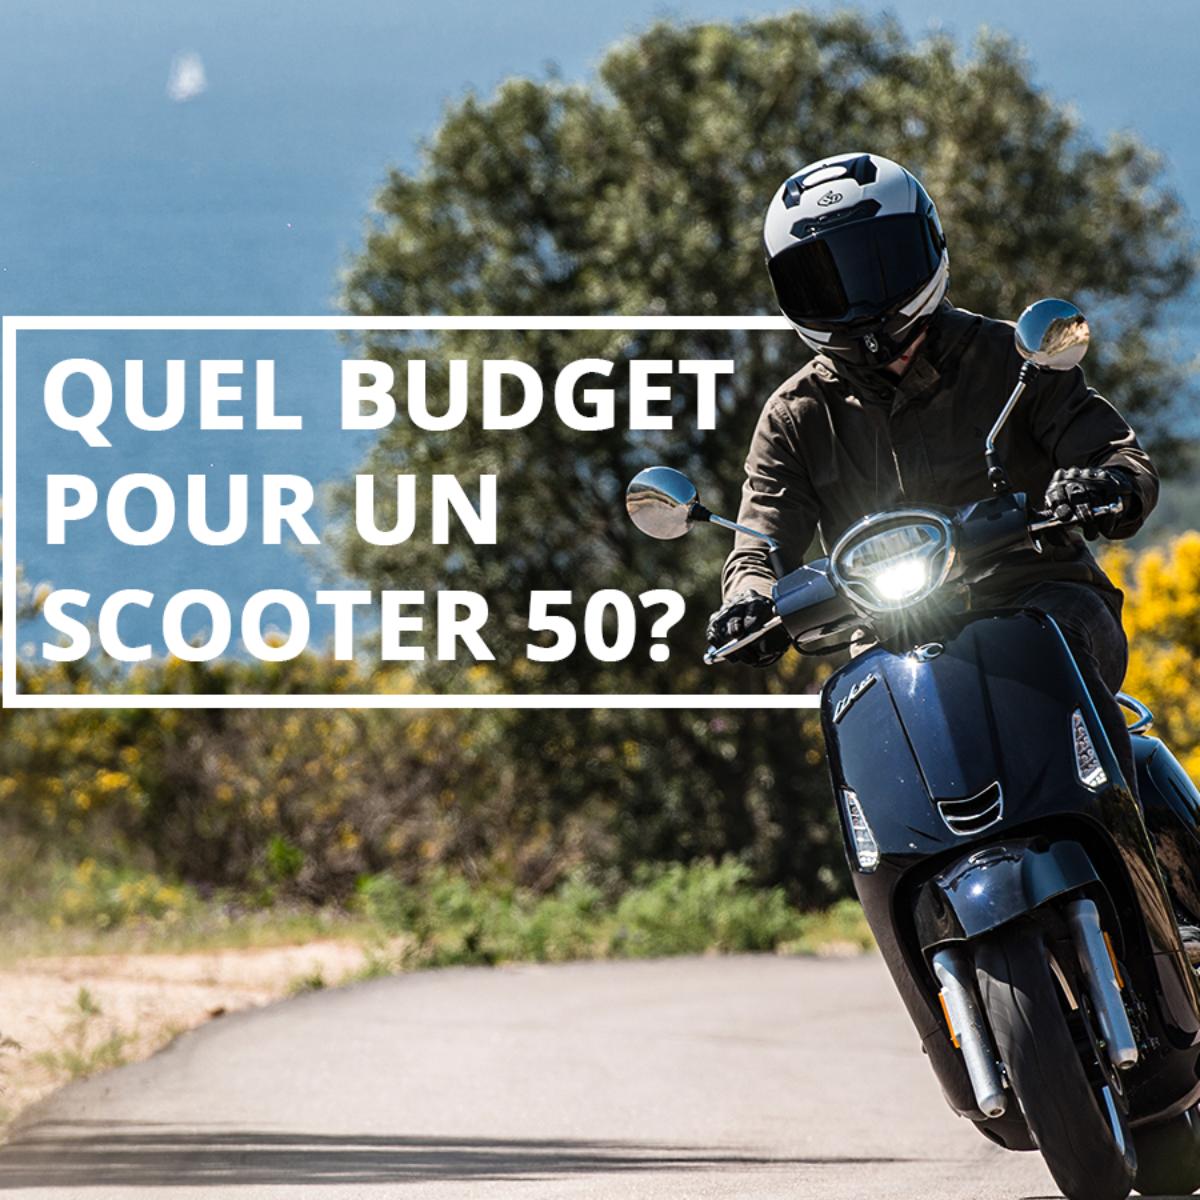 A quel prix acheter un scooter 50cc neuf ?